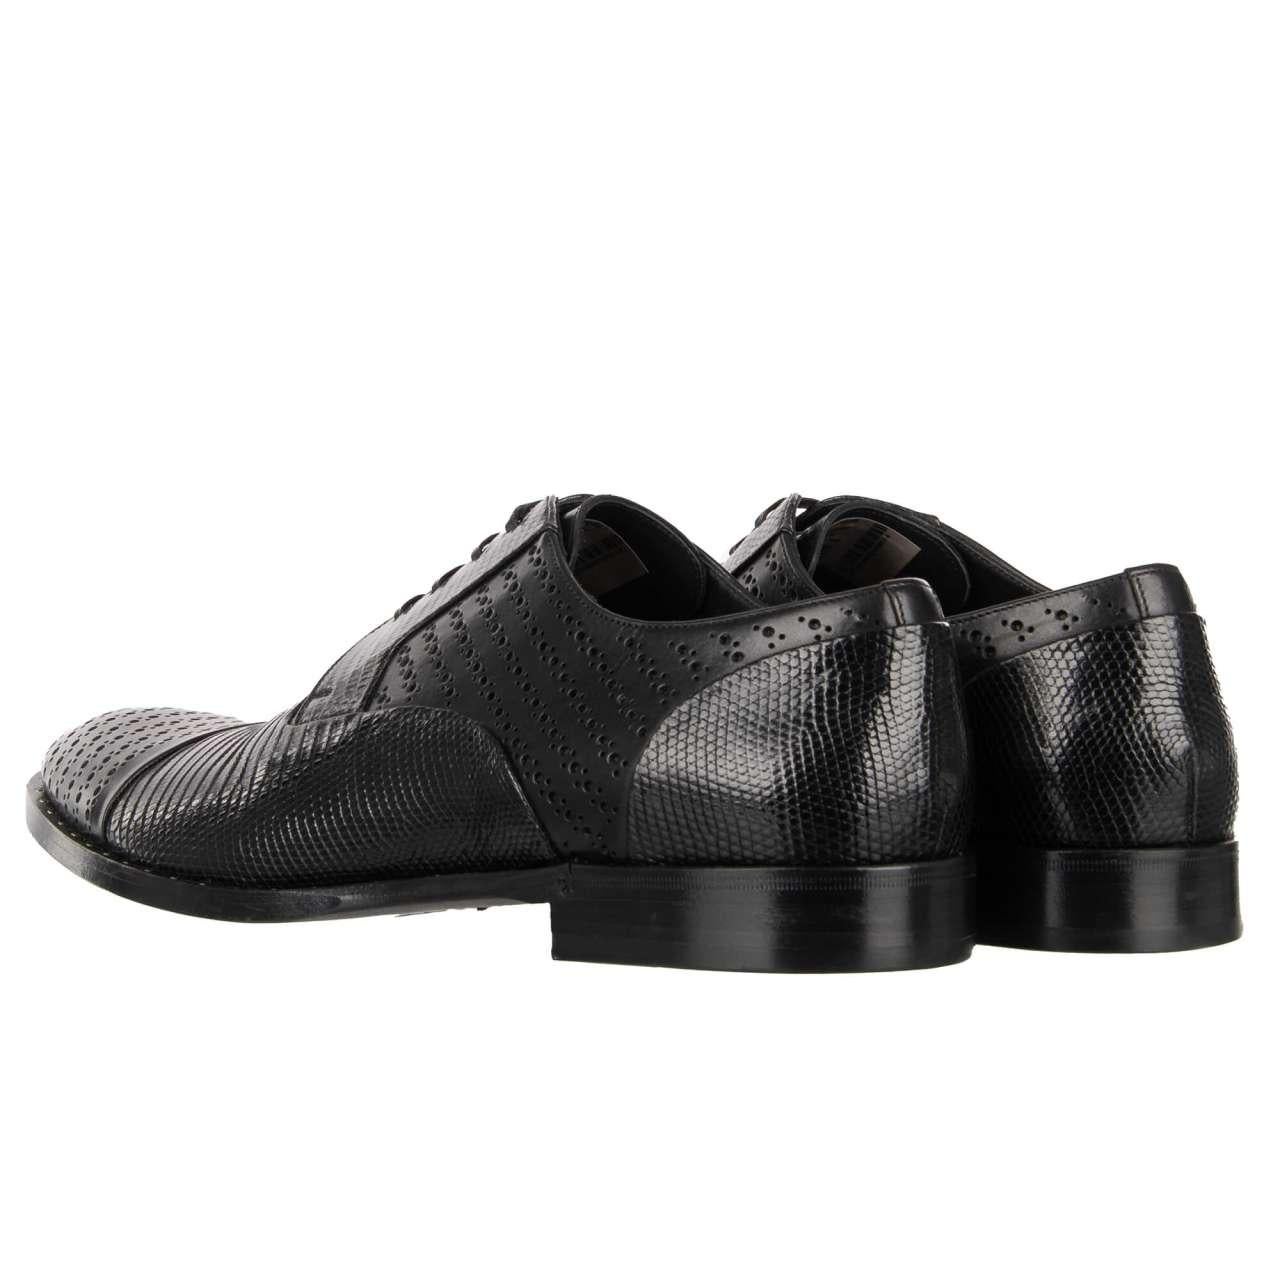 D&G Formal Patchwork Lizard Leather Derby Shoes NAPOLI Black 44 UK 10 US 11 For Sale 2